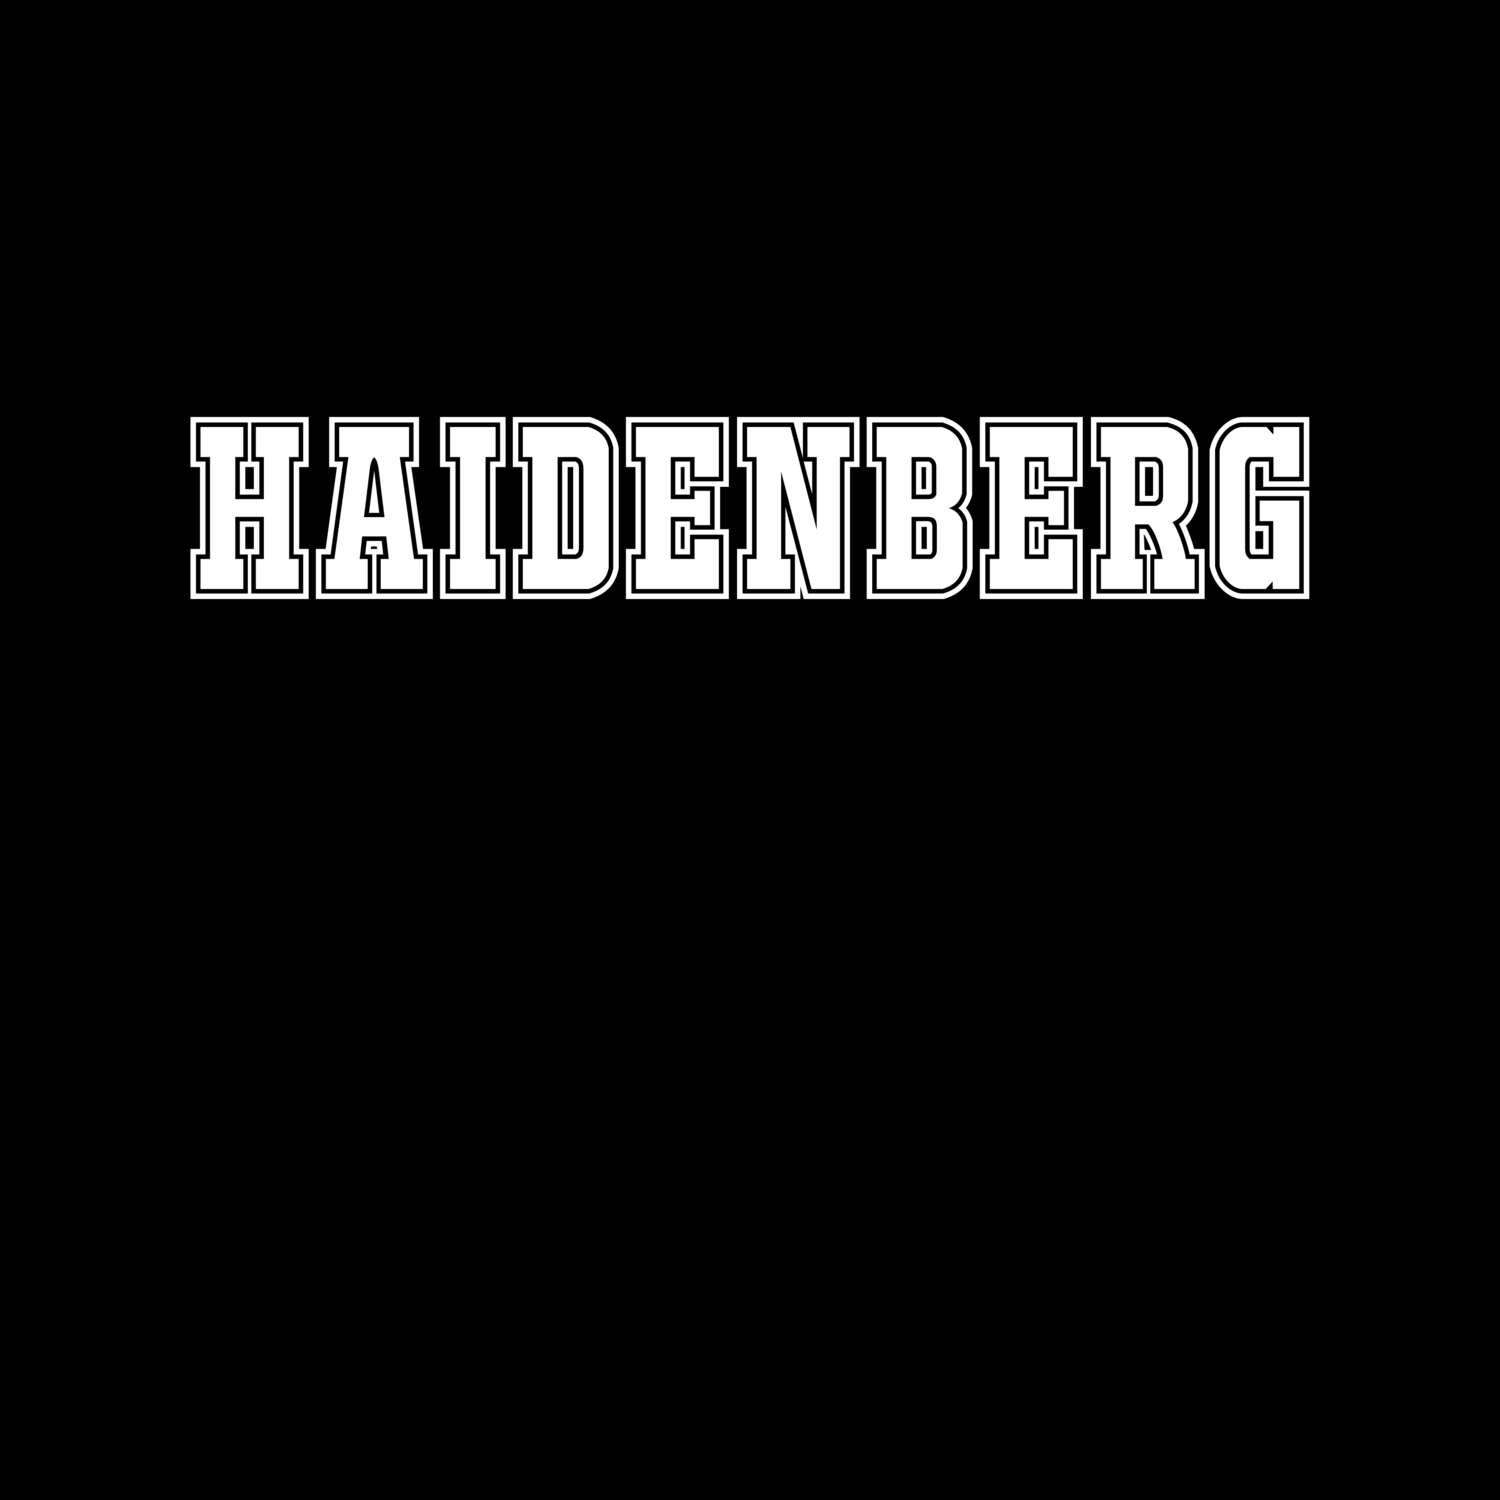 Haidenberg T-Shirt »Classic«